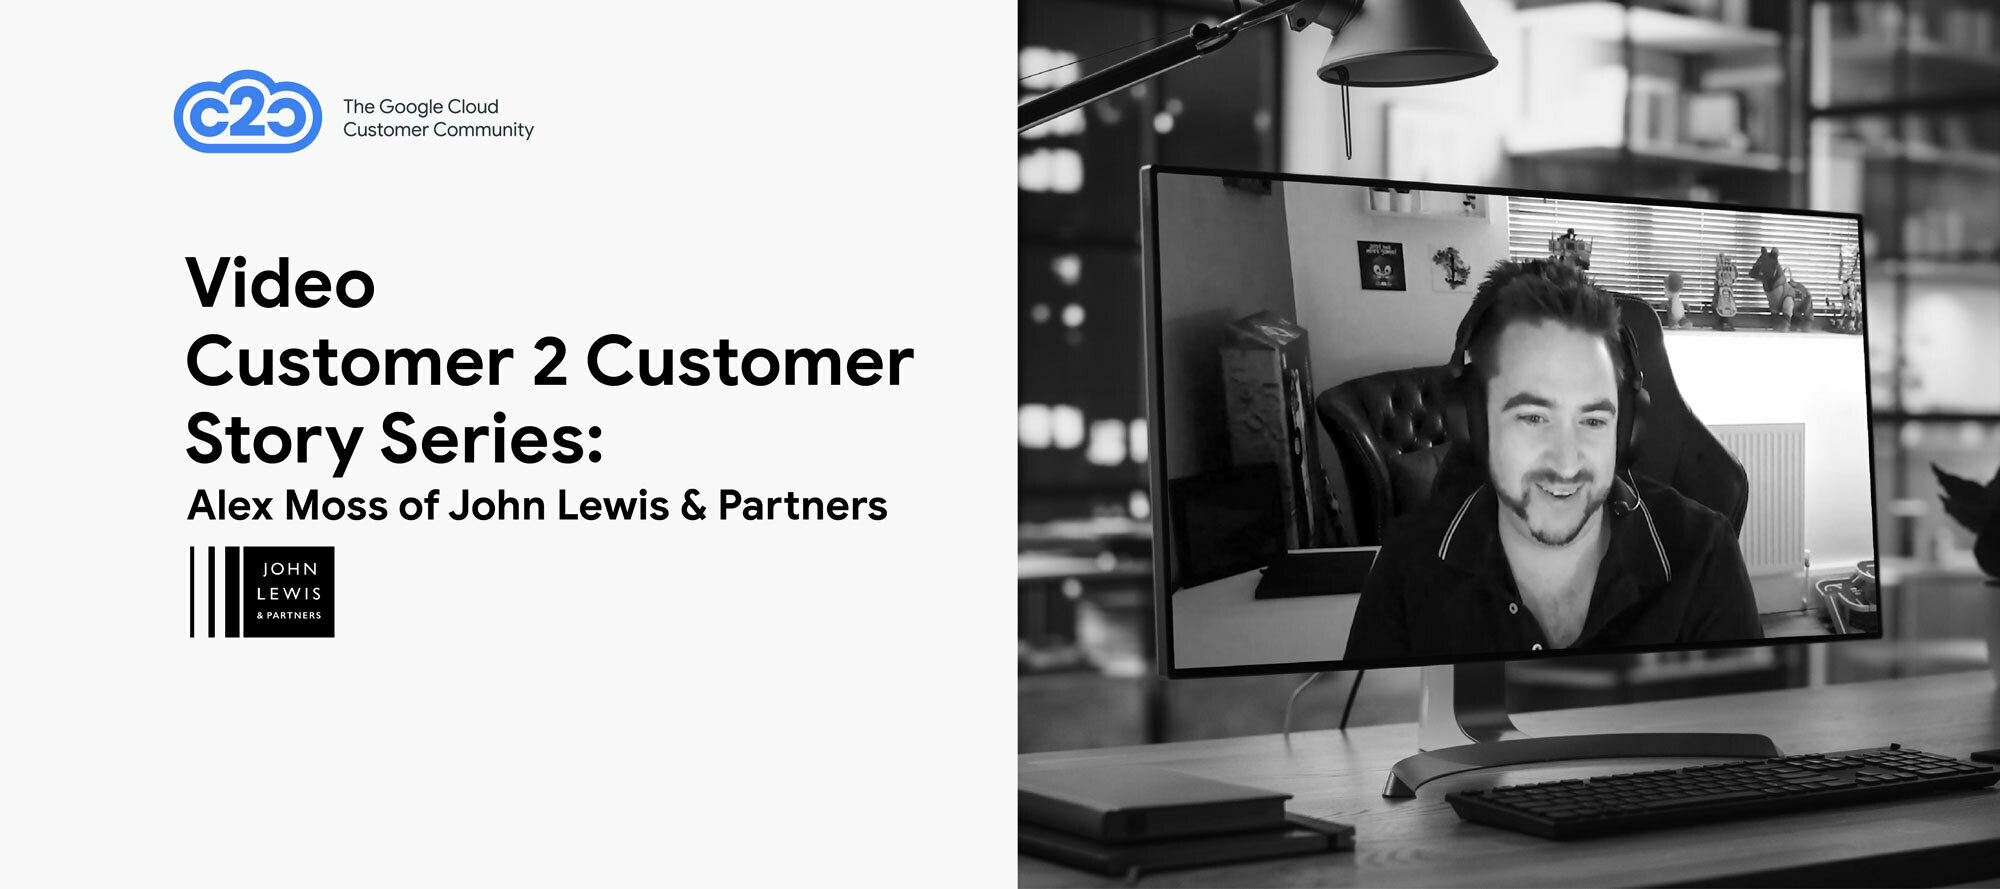 Video Customer 2 Customer Story Series: Alex Moss of John Lewis & Partners